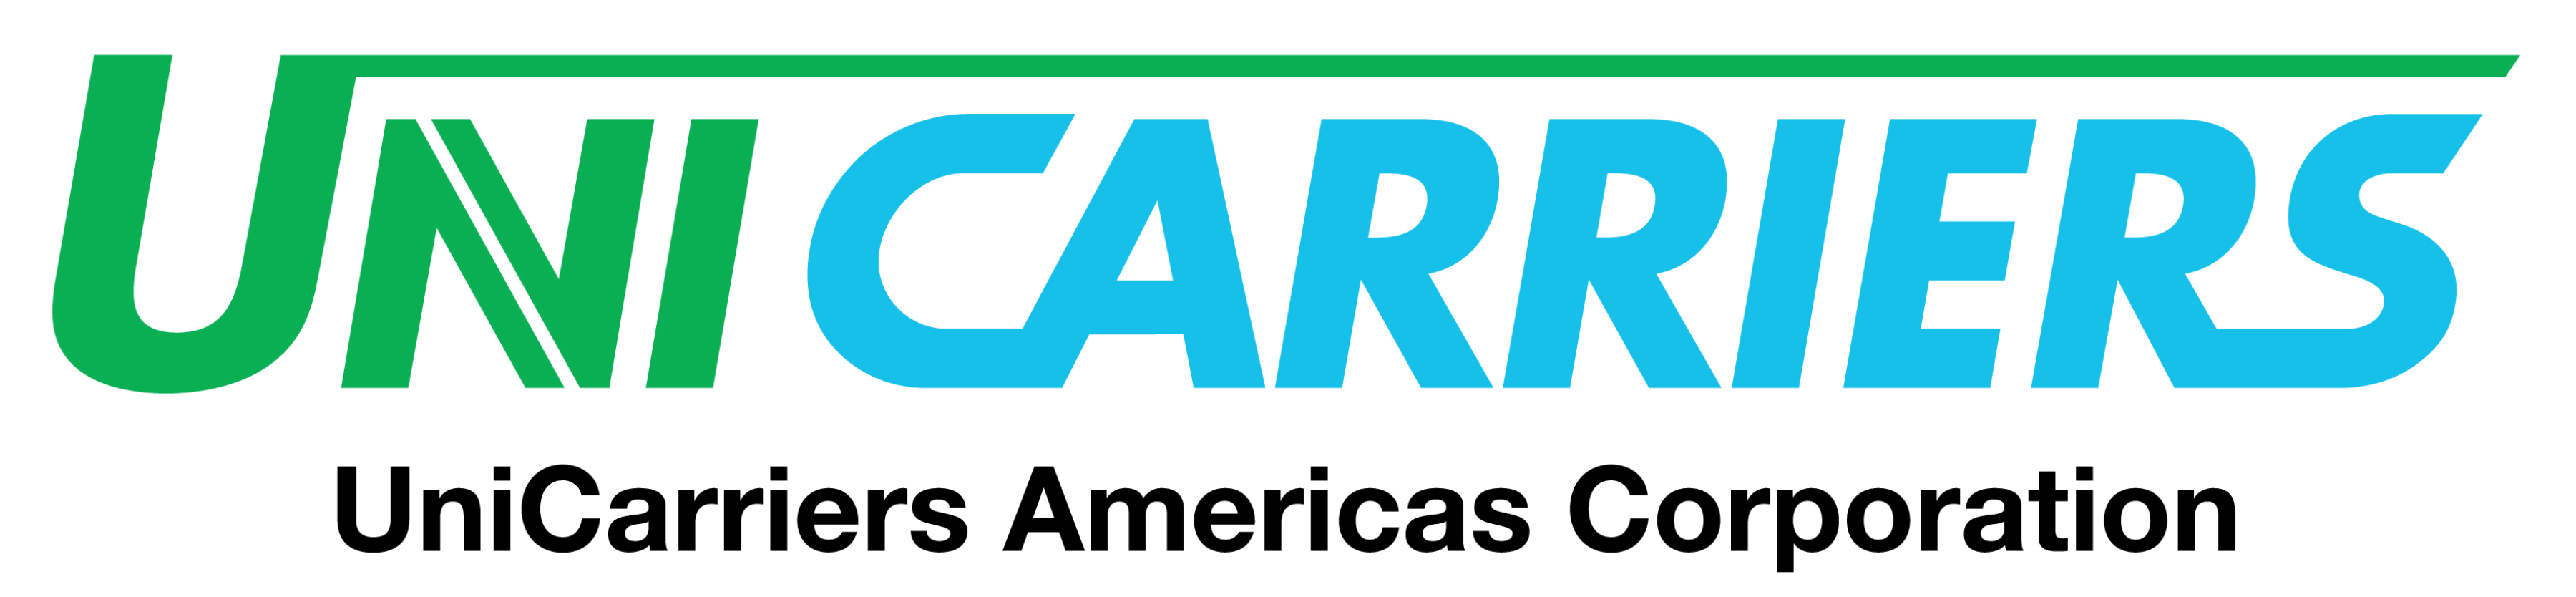 UniCarriers Corporation Logo photo - 1